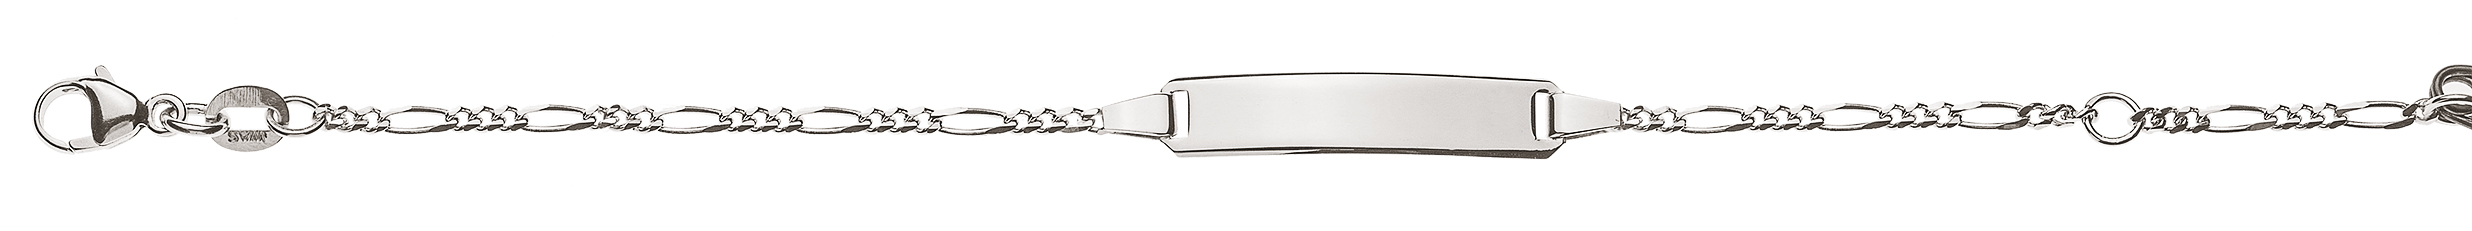 AURONOS Style ID-Bracelet en or blanc 9k Chaîne Figaro 18cm